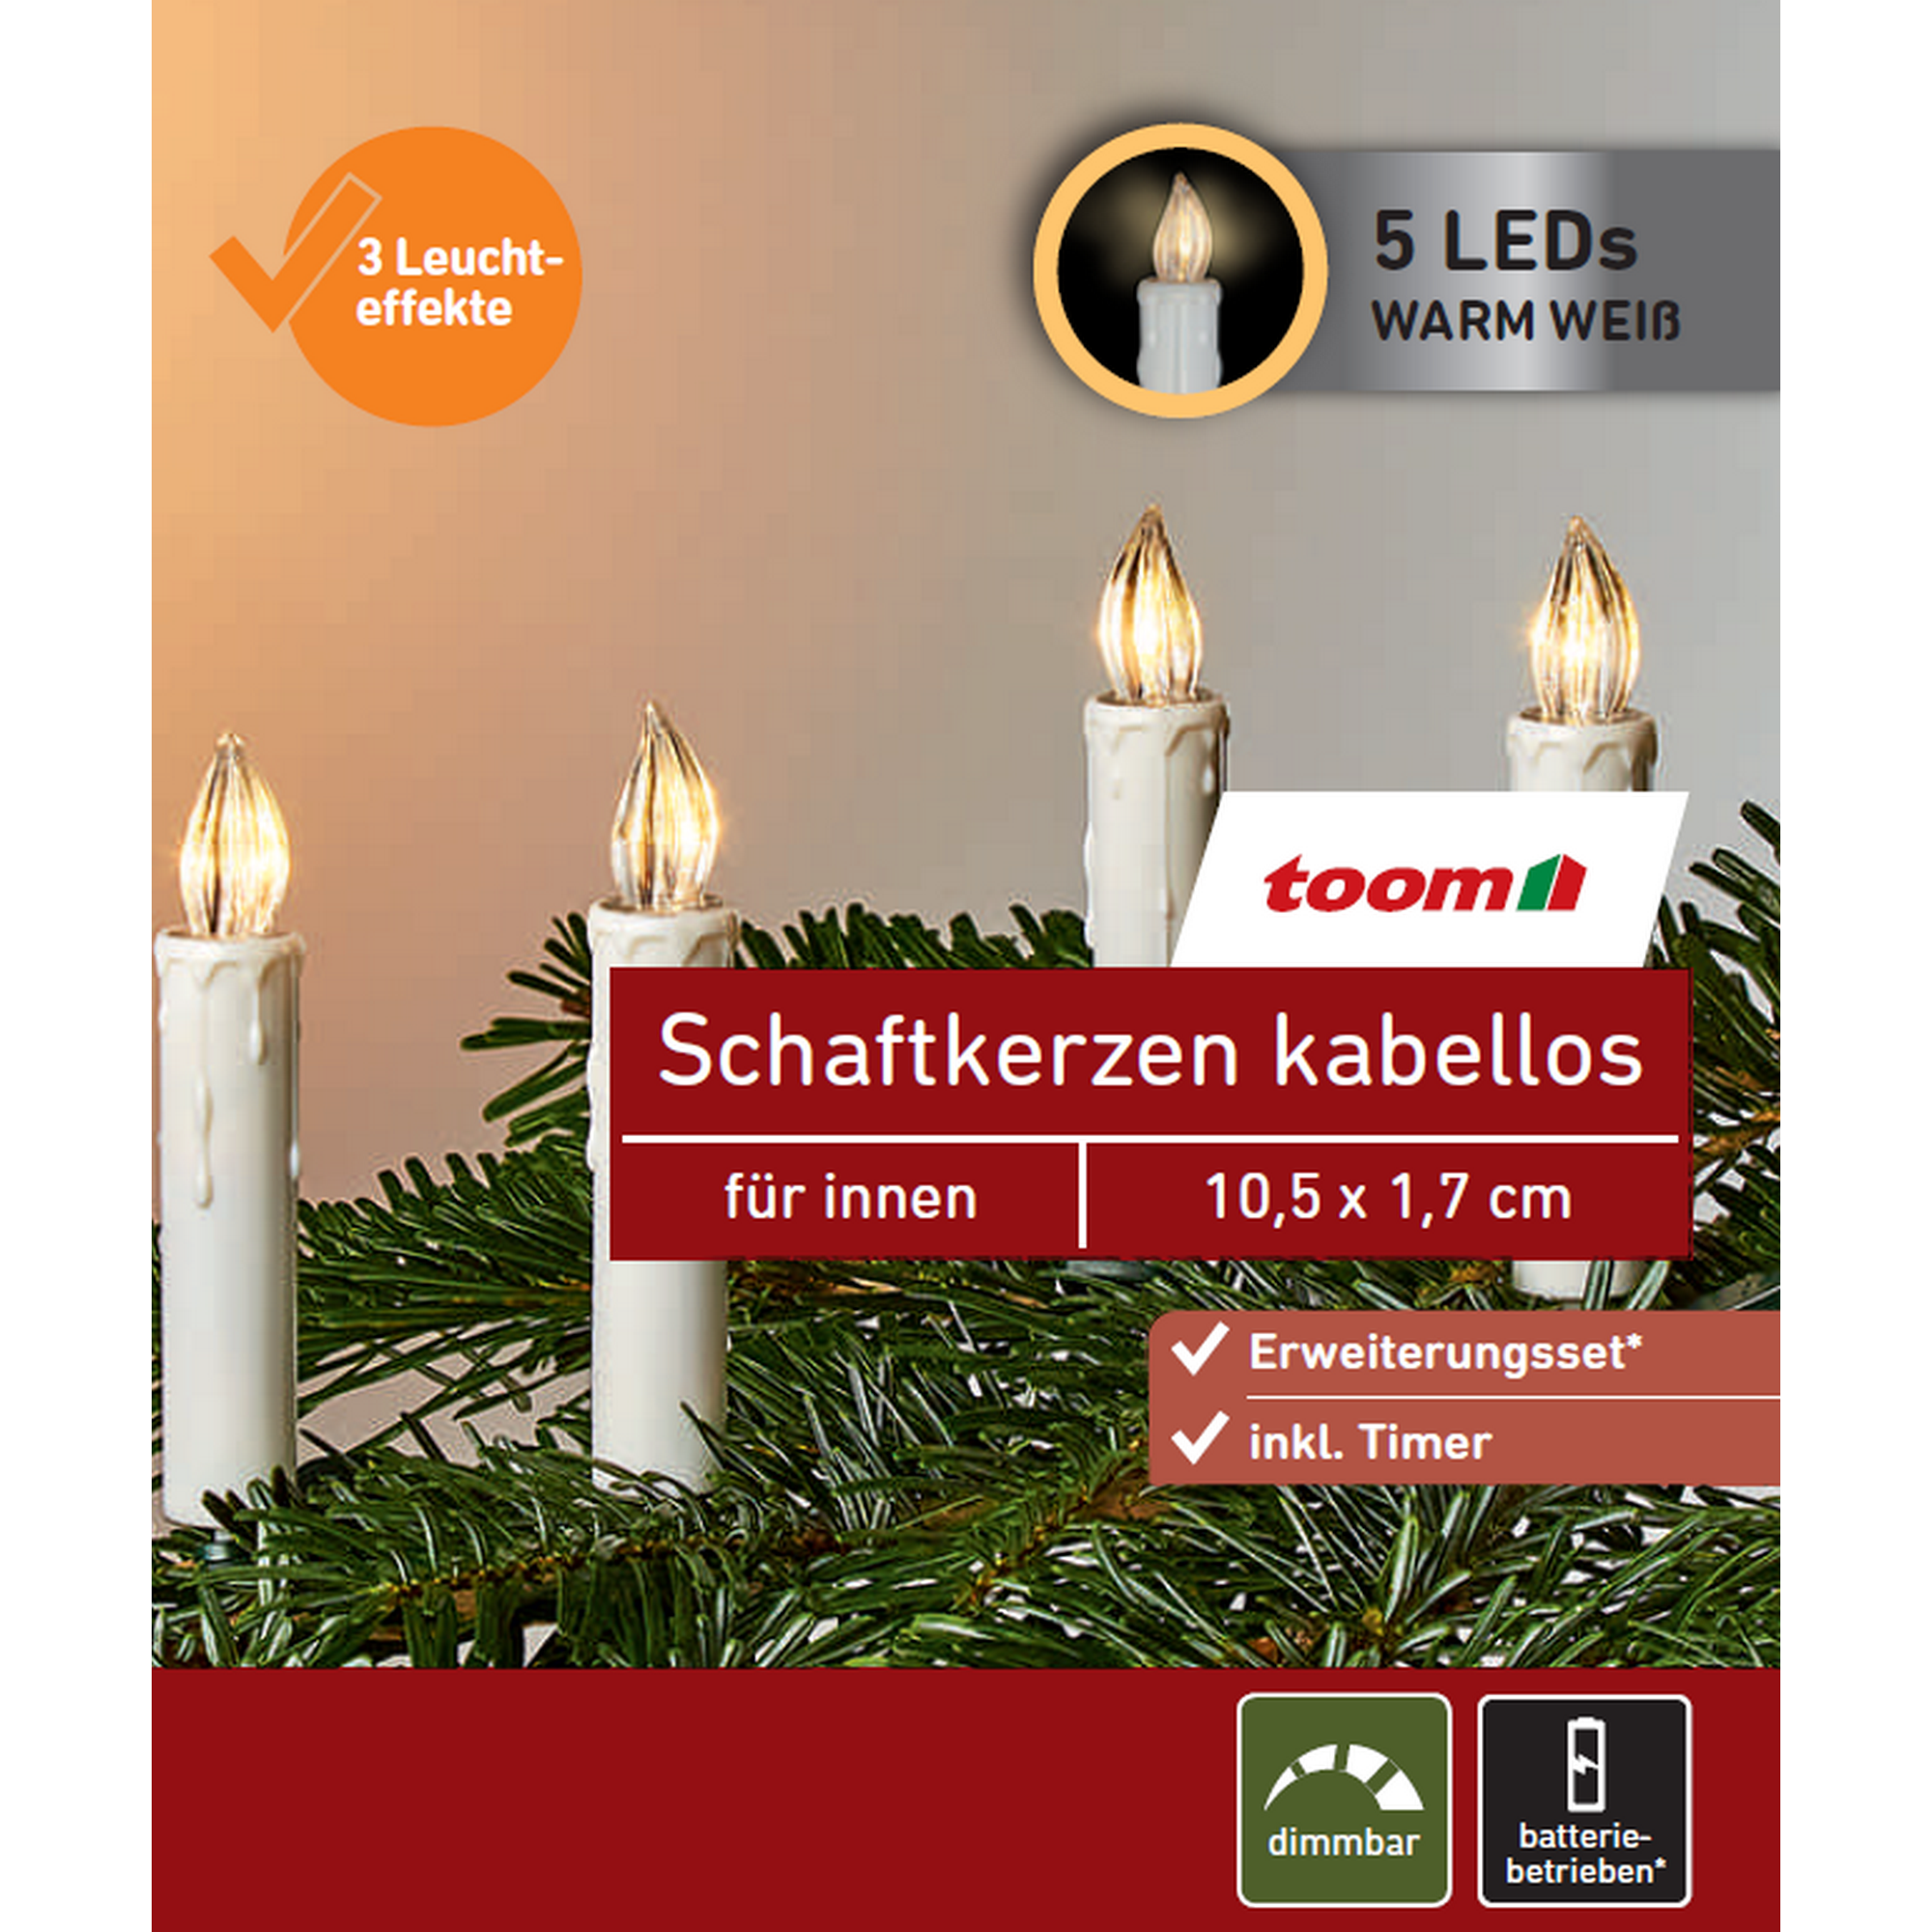 LED-Schaftkerzen-Erweiterungs-Set 5 LEDs warmweiß Ø 1,7 x 10,5 cm 5 Stück + product picture